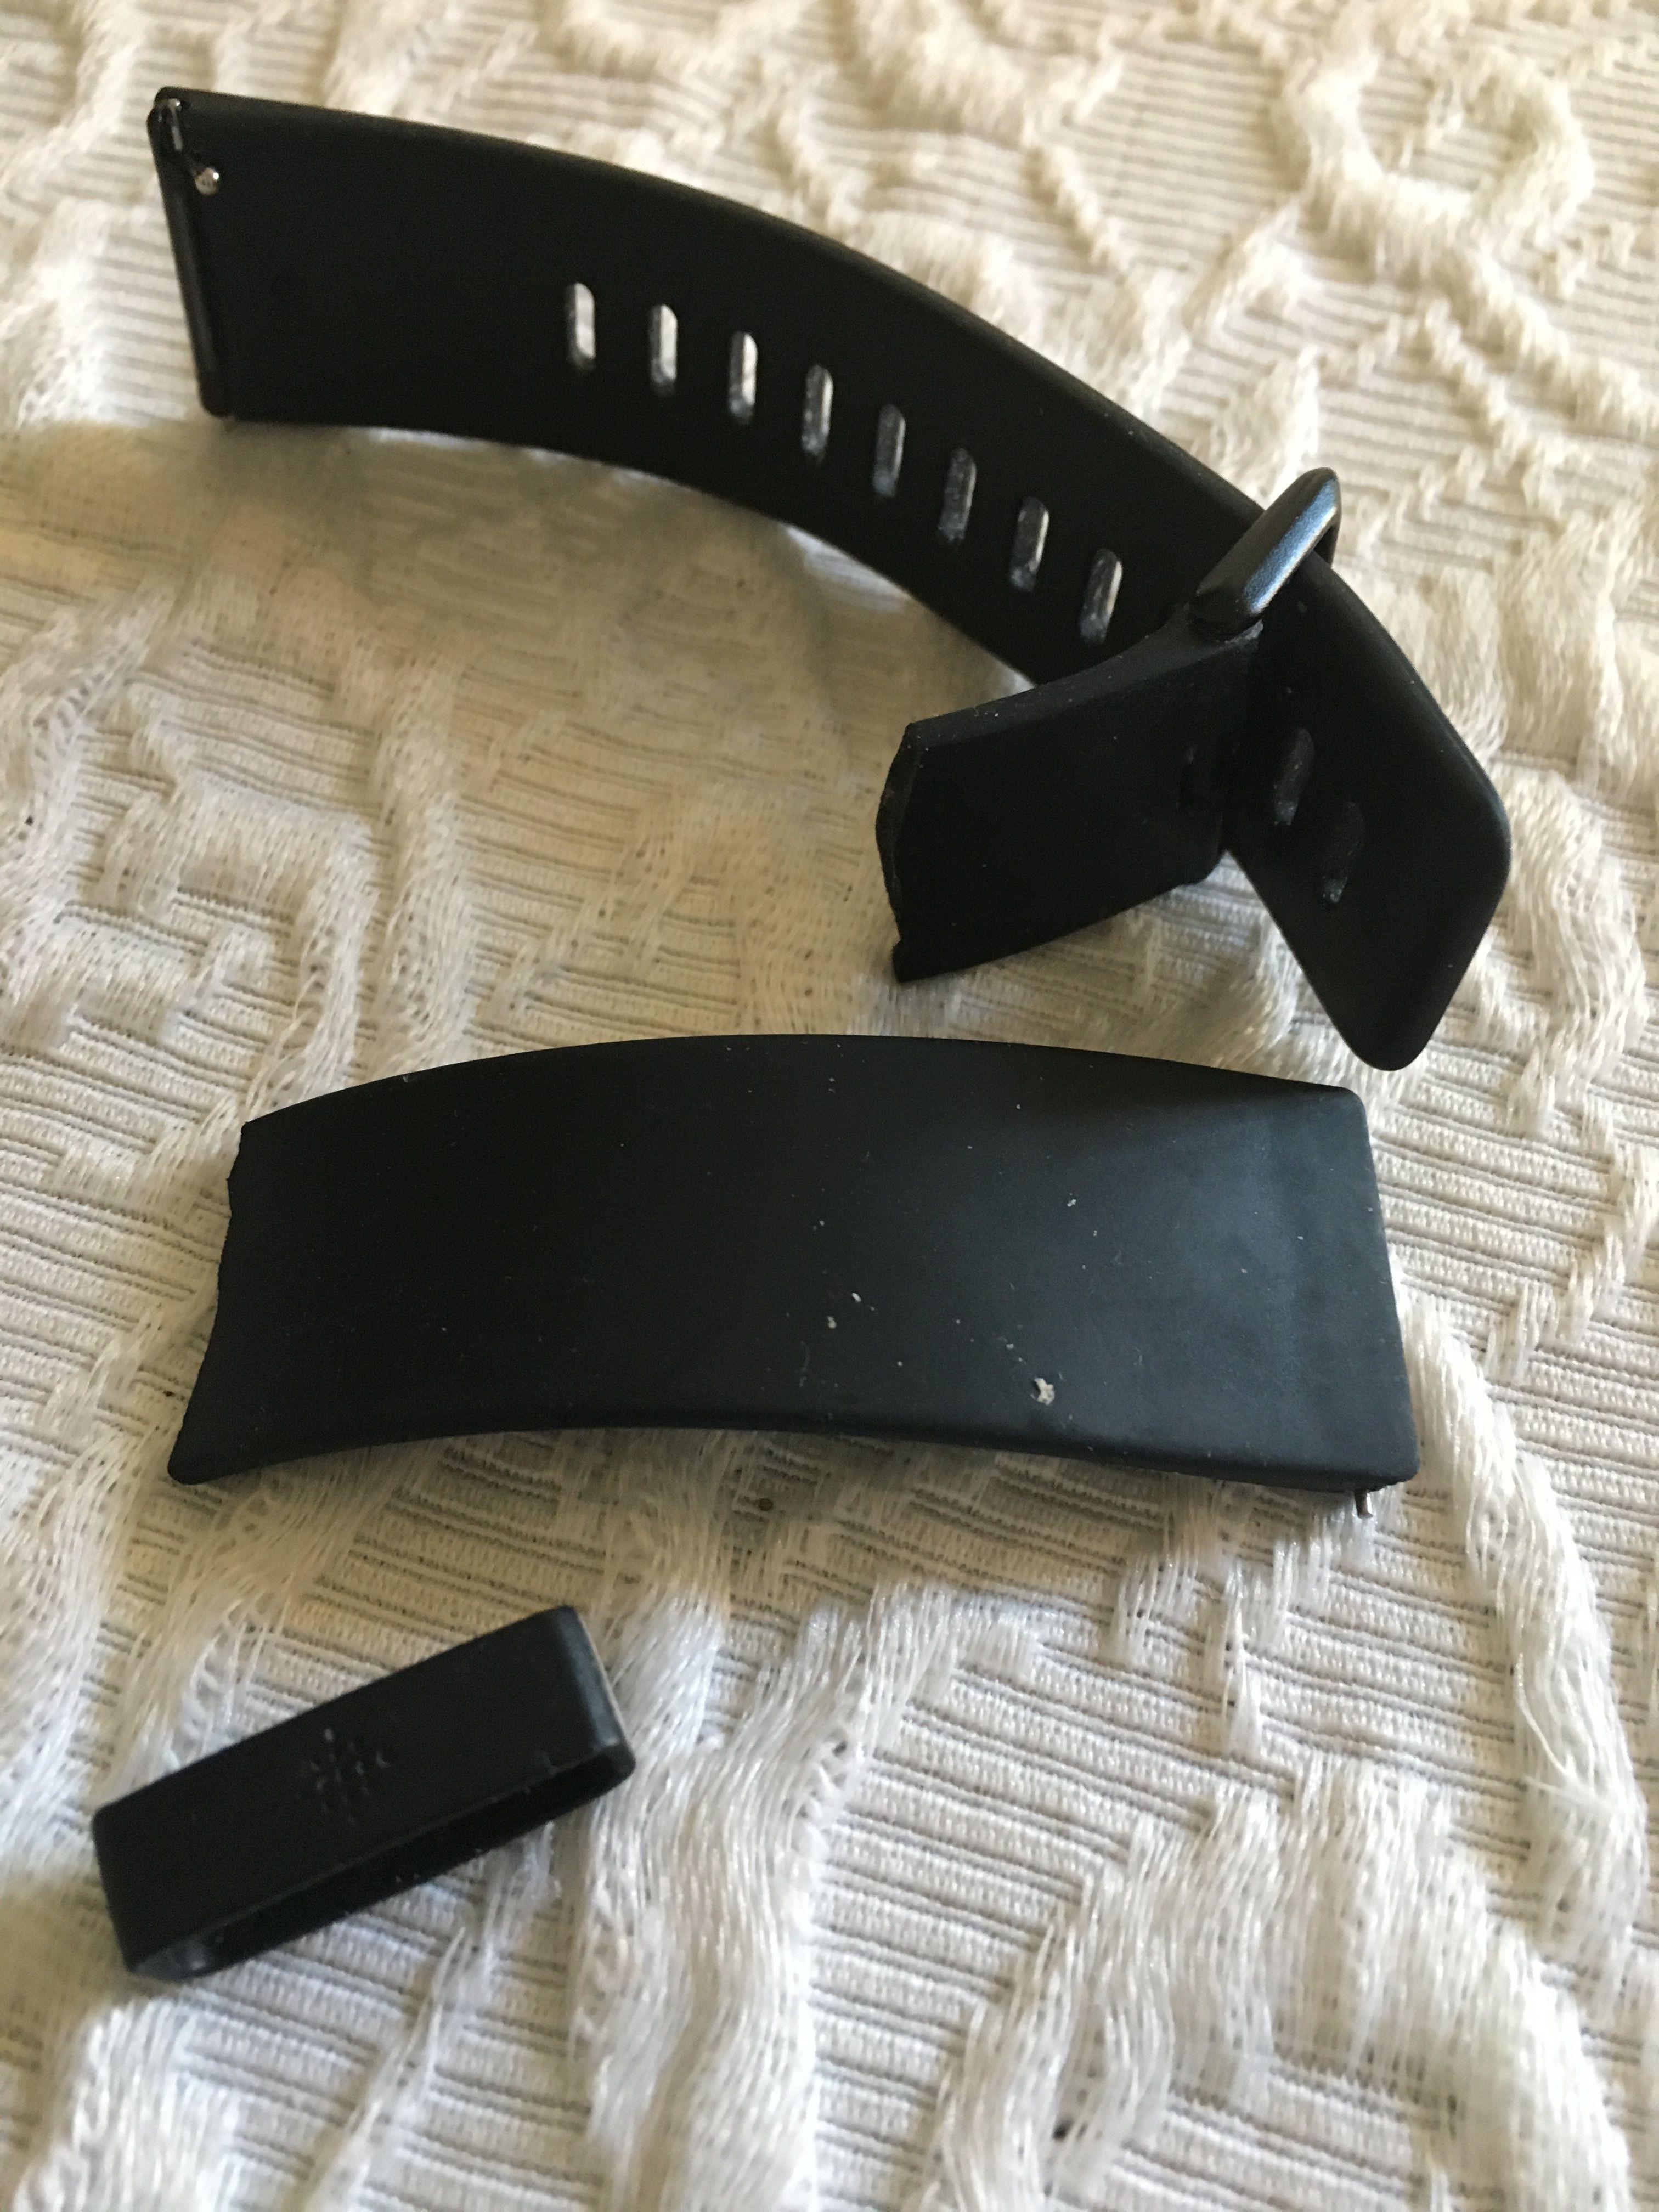 fitbit wristband broke